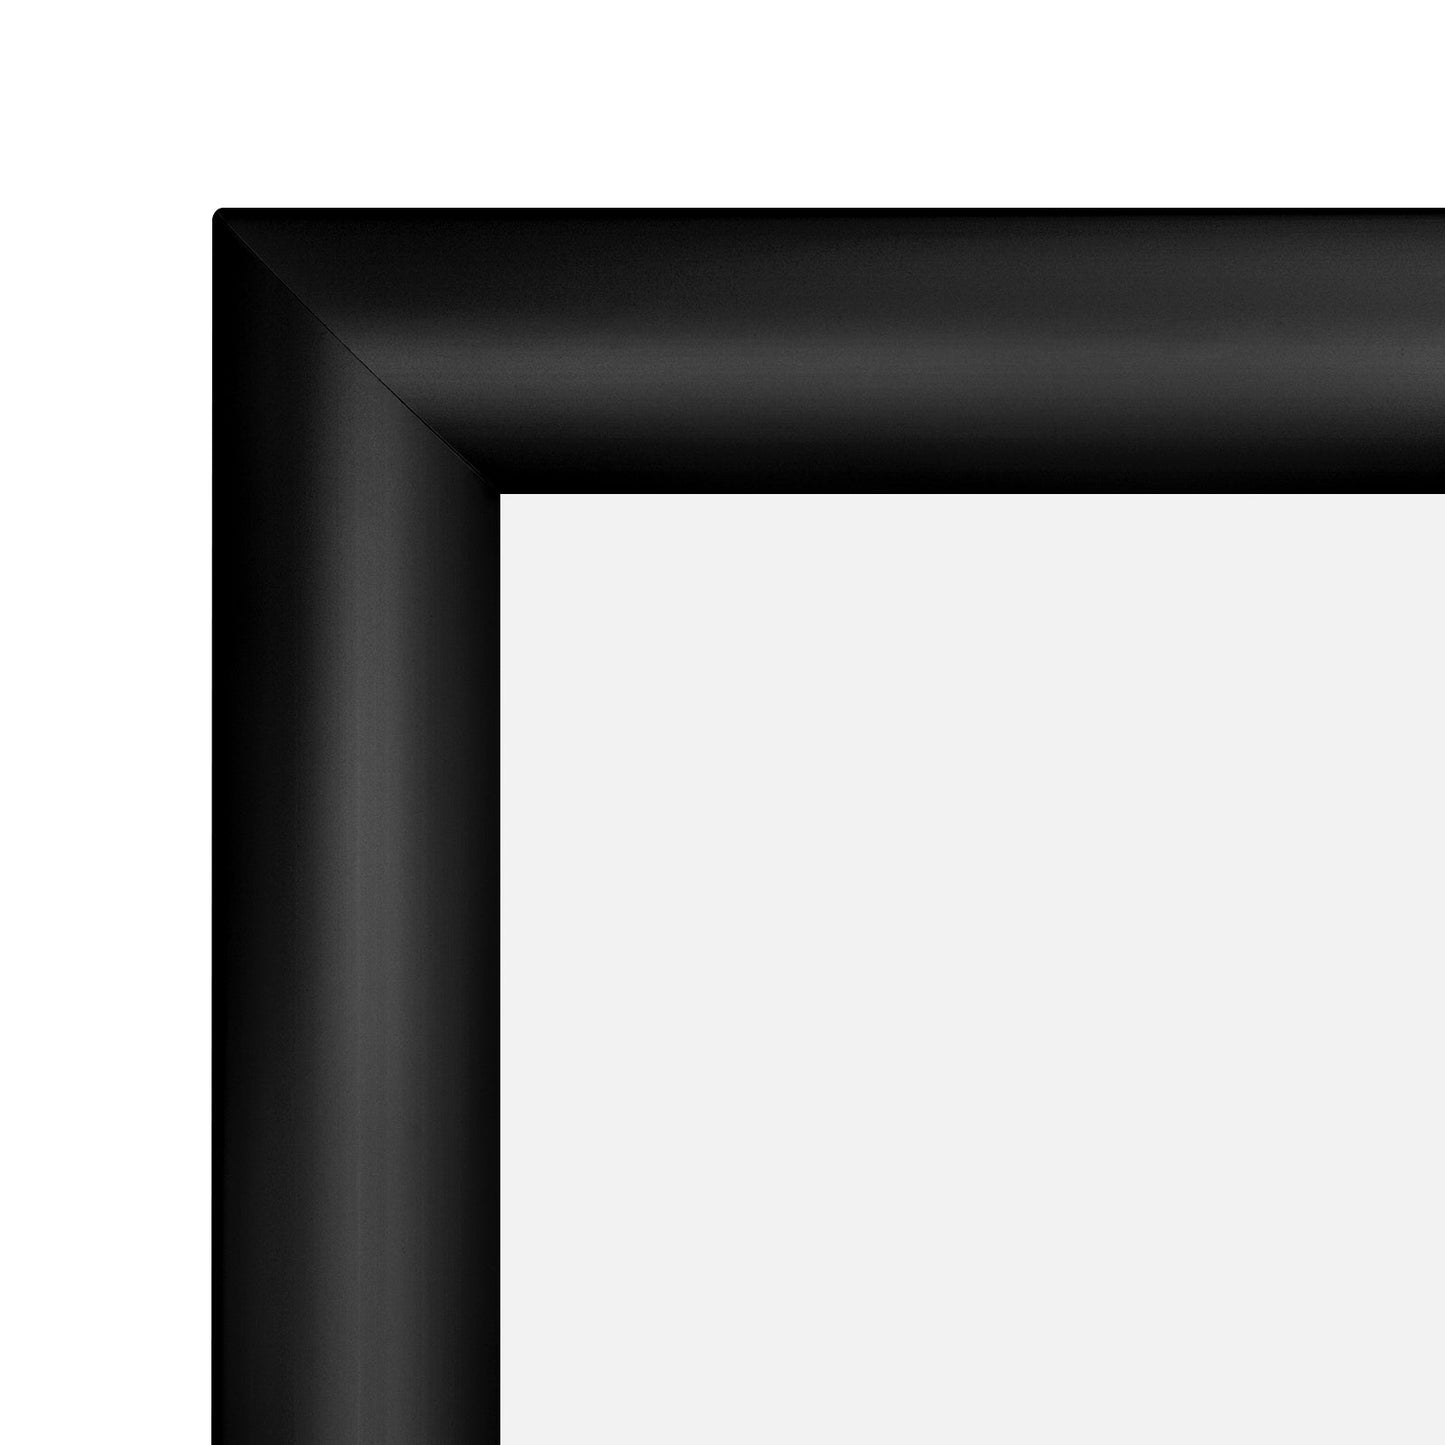 A2 Black SnapeZo® Snap Frame - 1.2" Profile